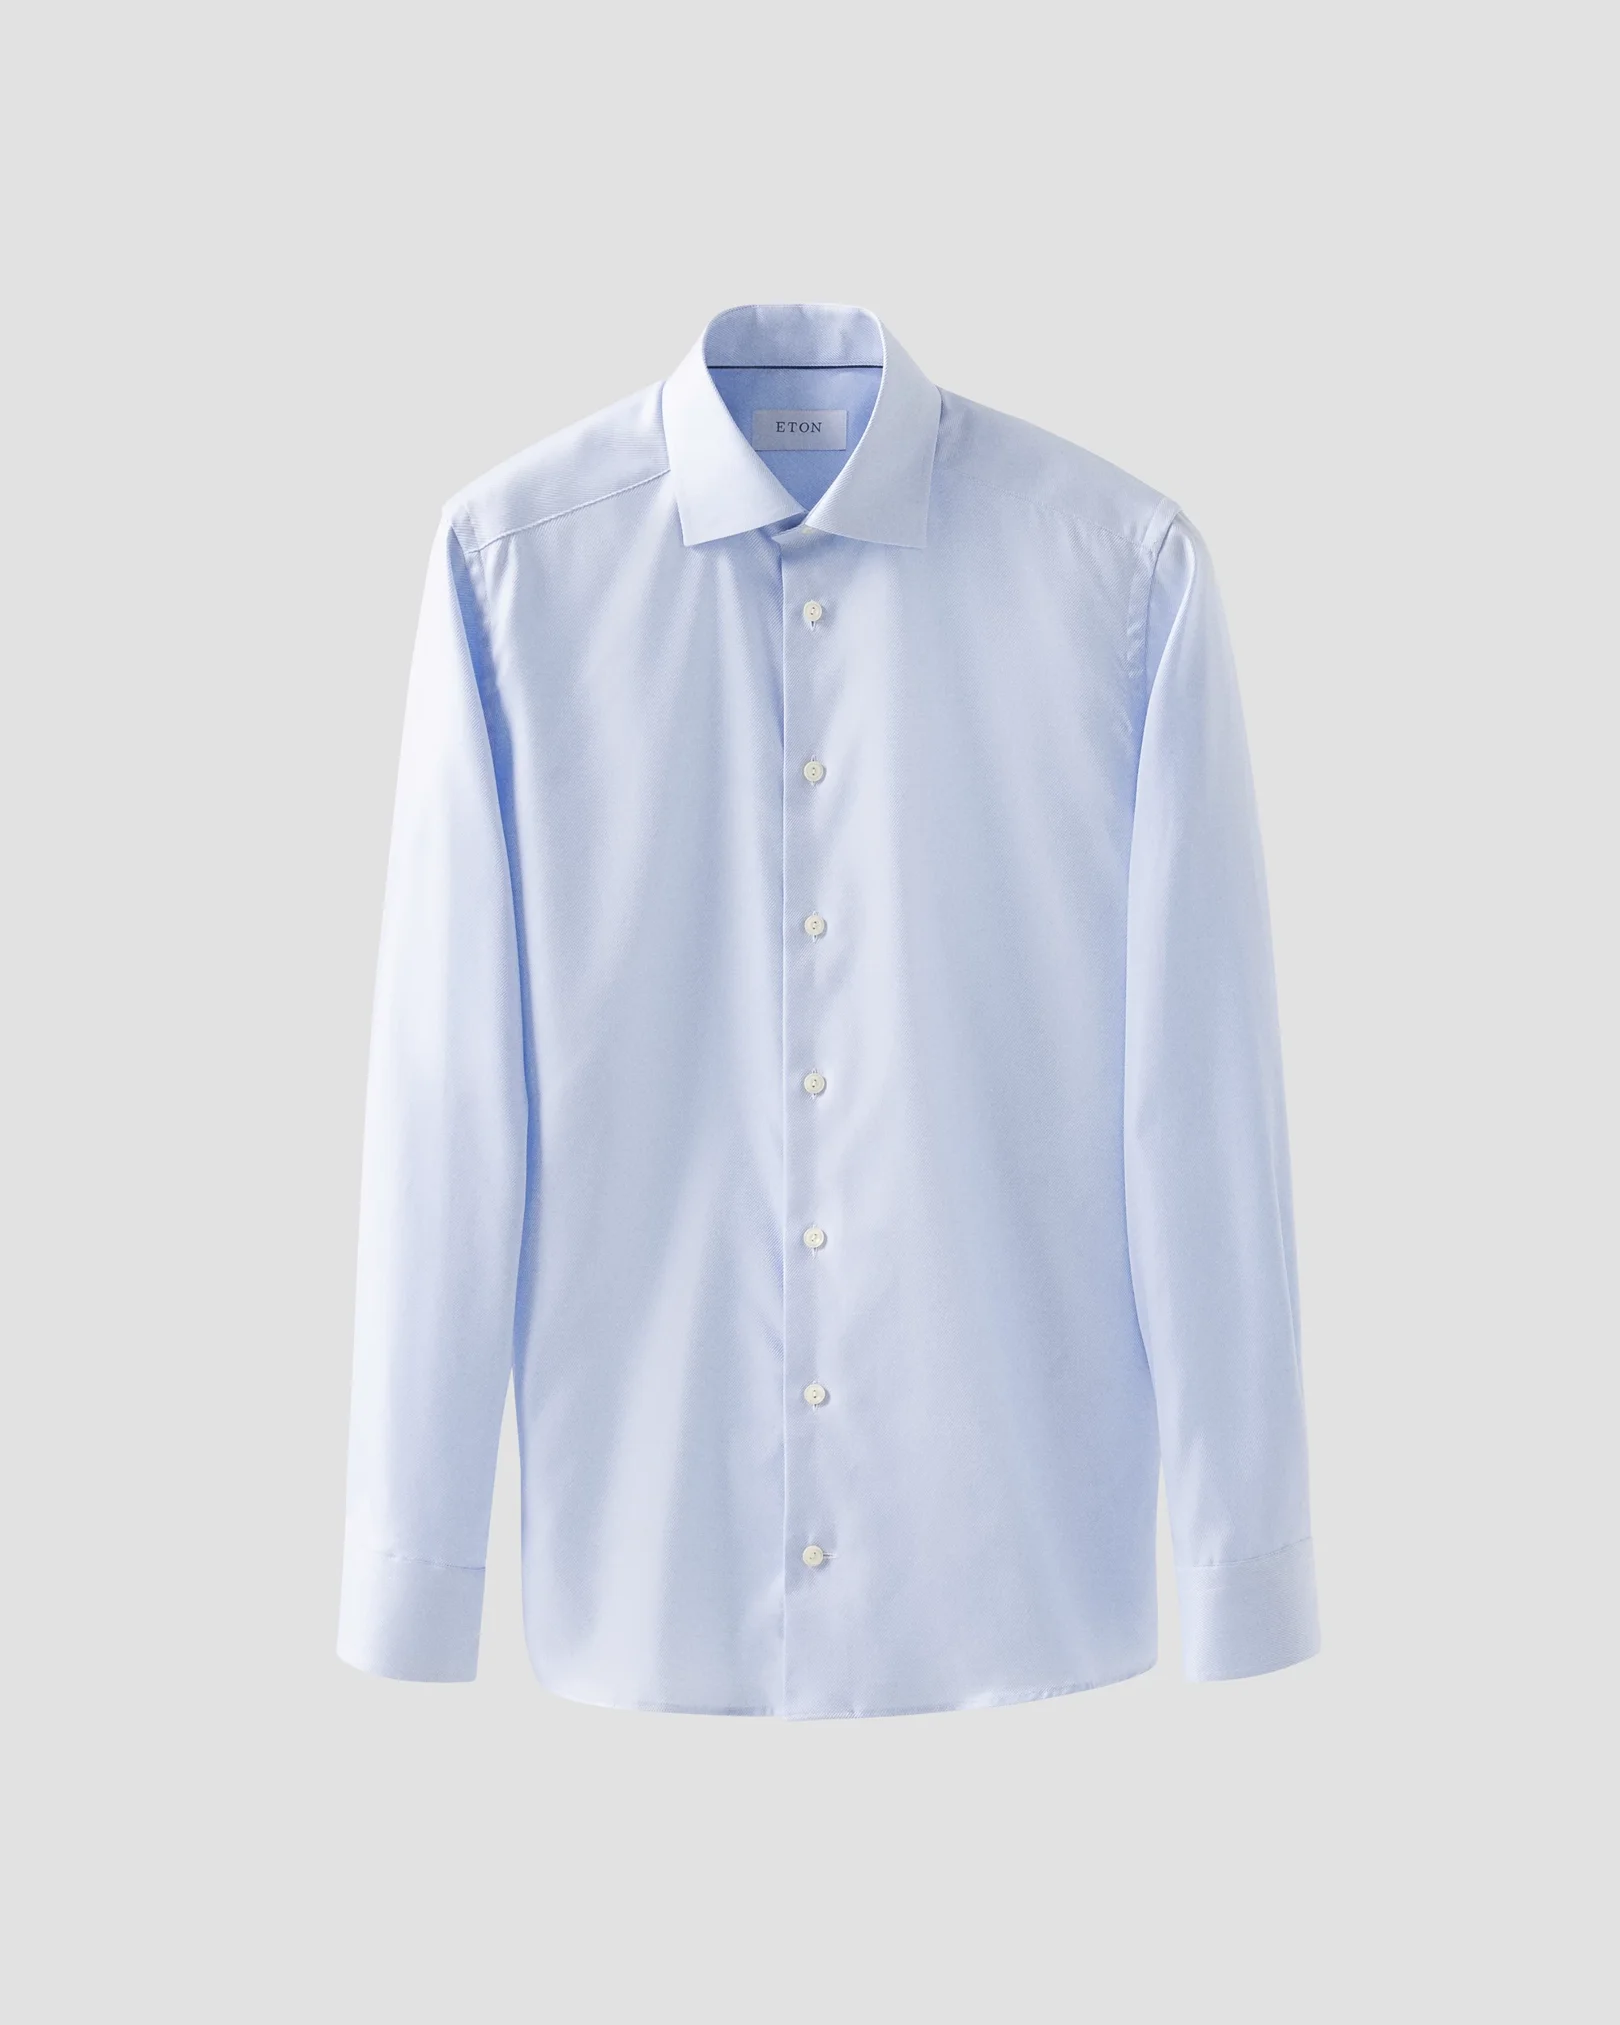 Eton - light blue textured twill shirt